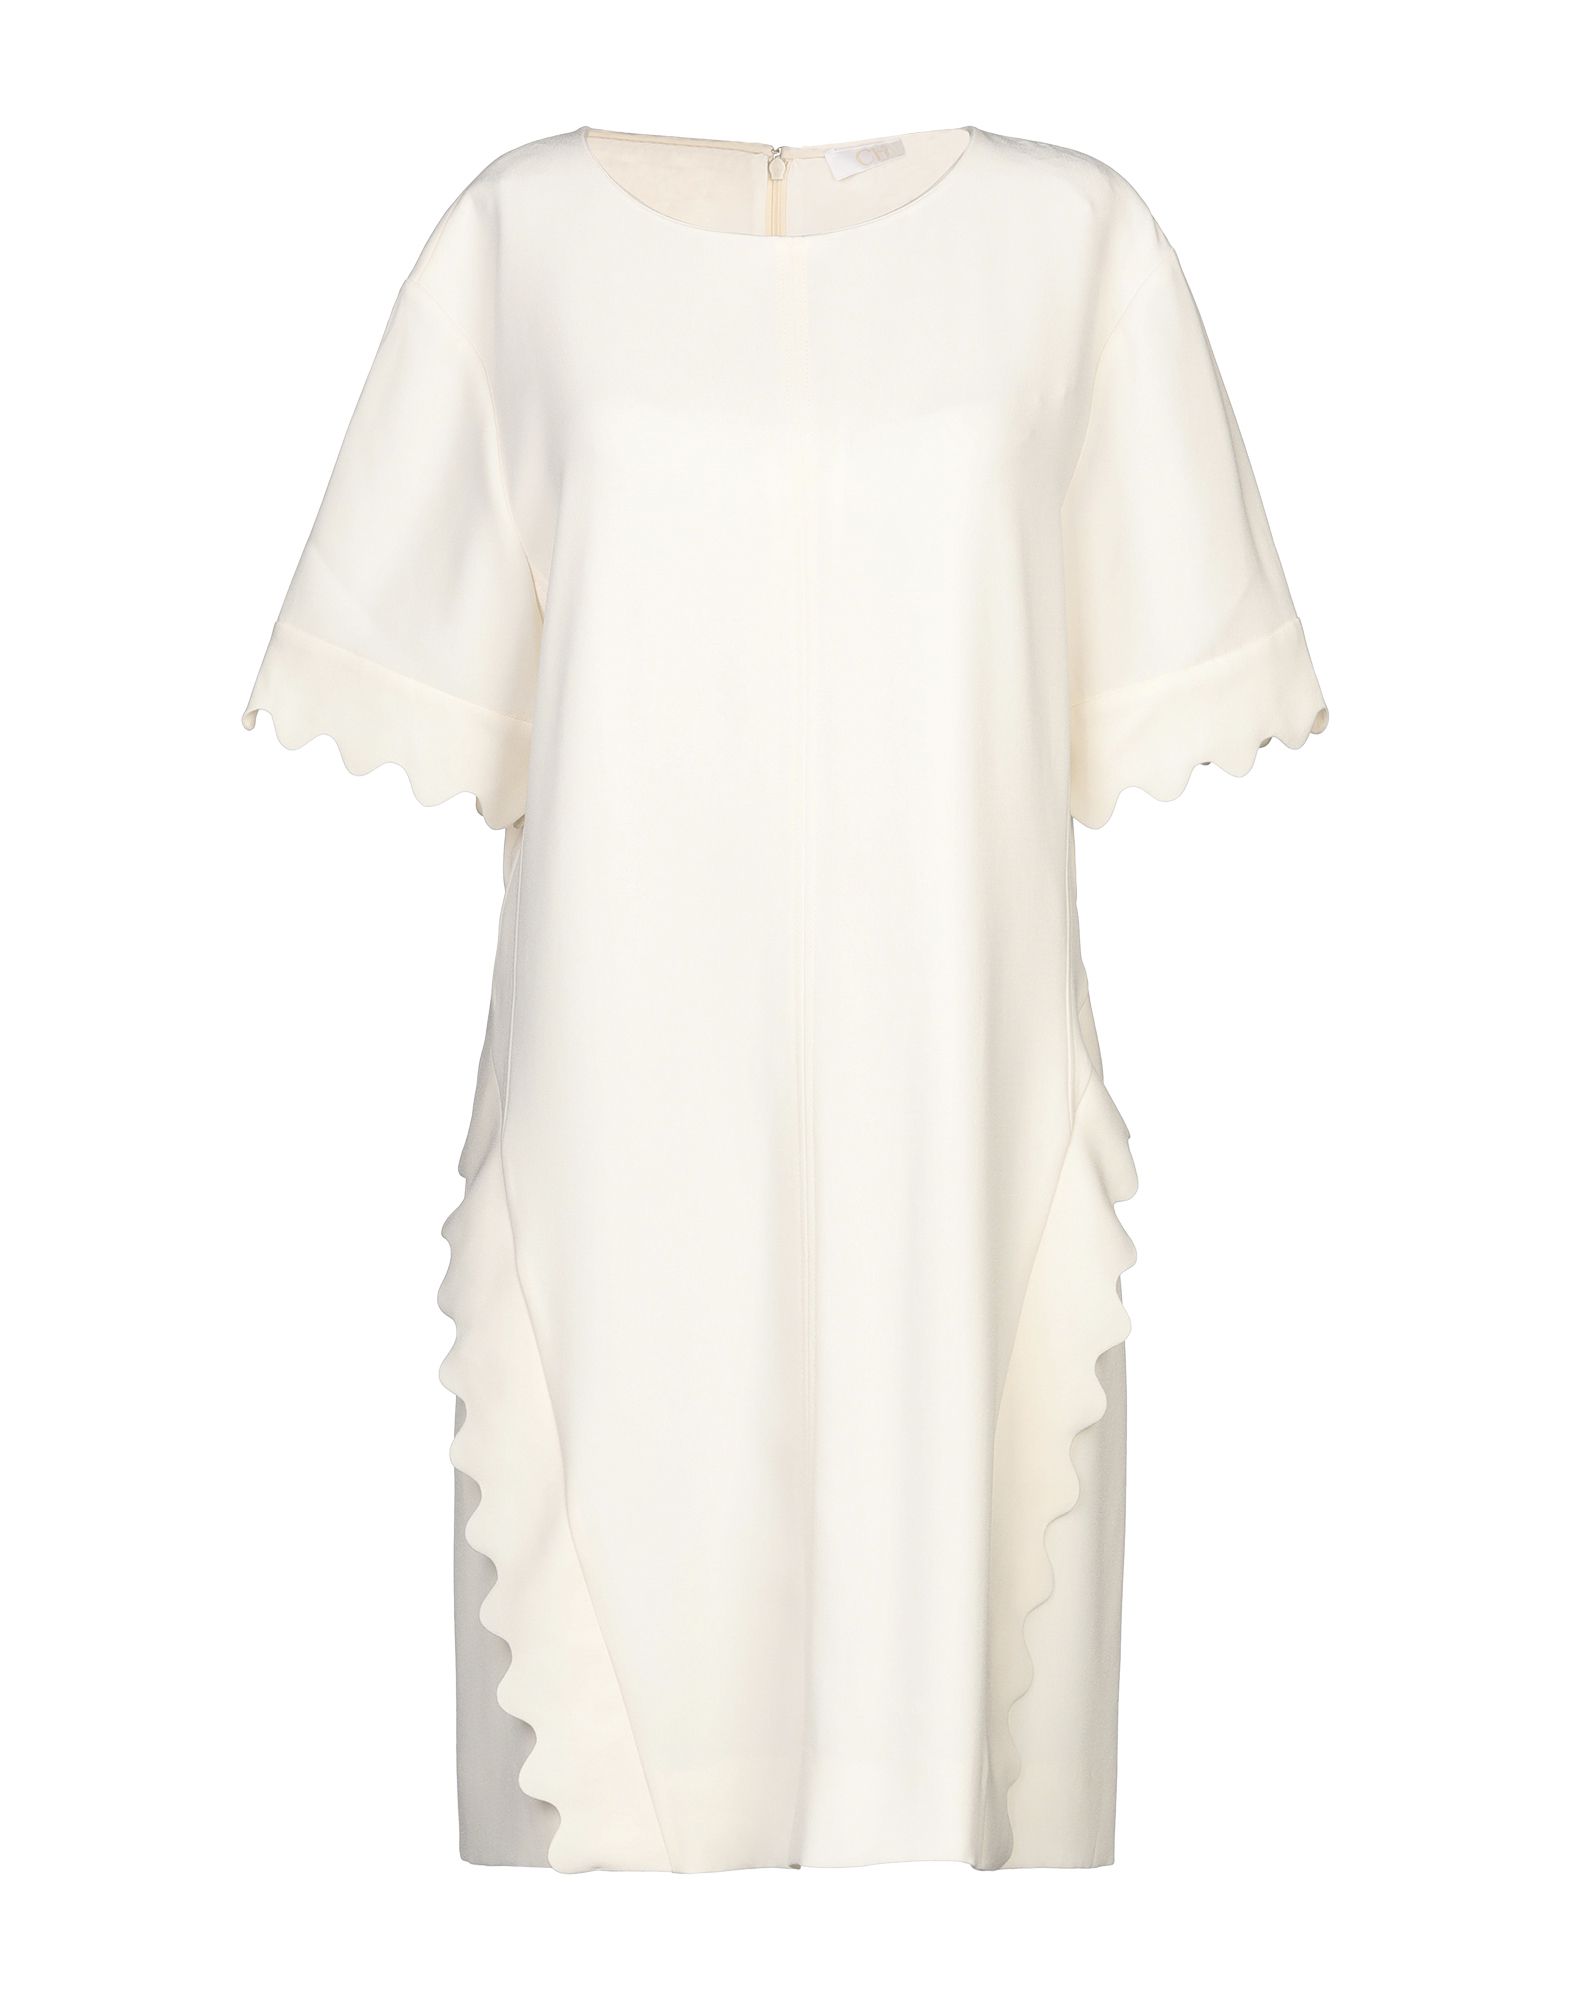 SeebyChloe ワンピース ドレス 刺繍 アイボリー ホワイト 白 34-